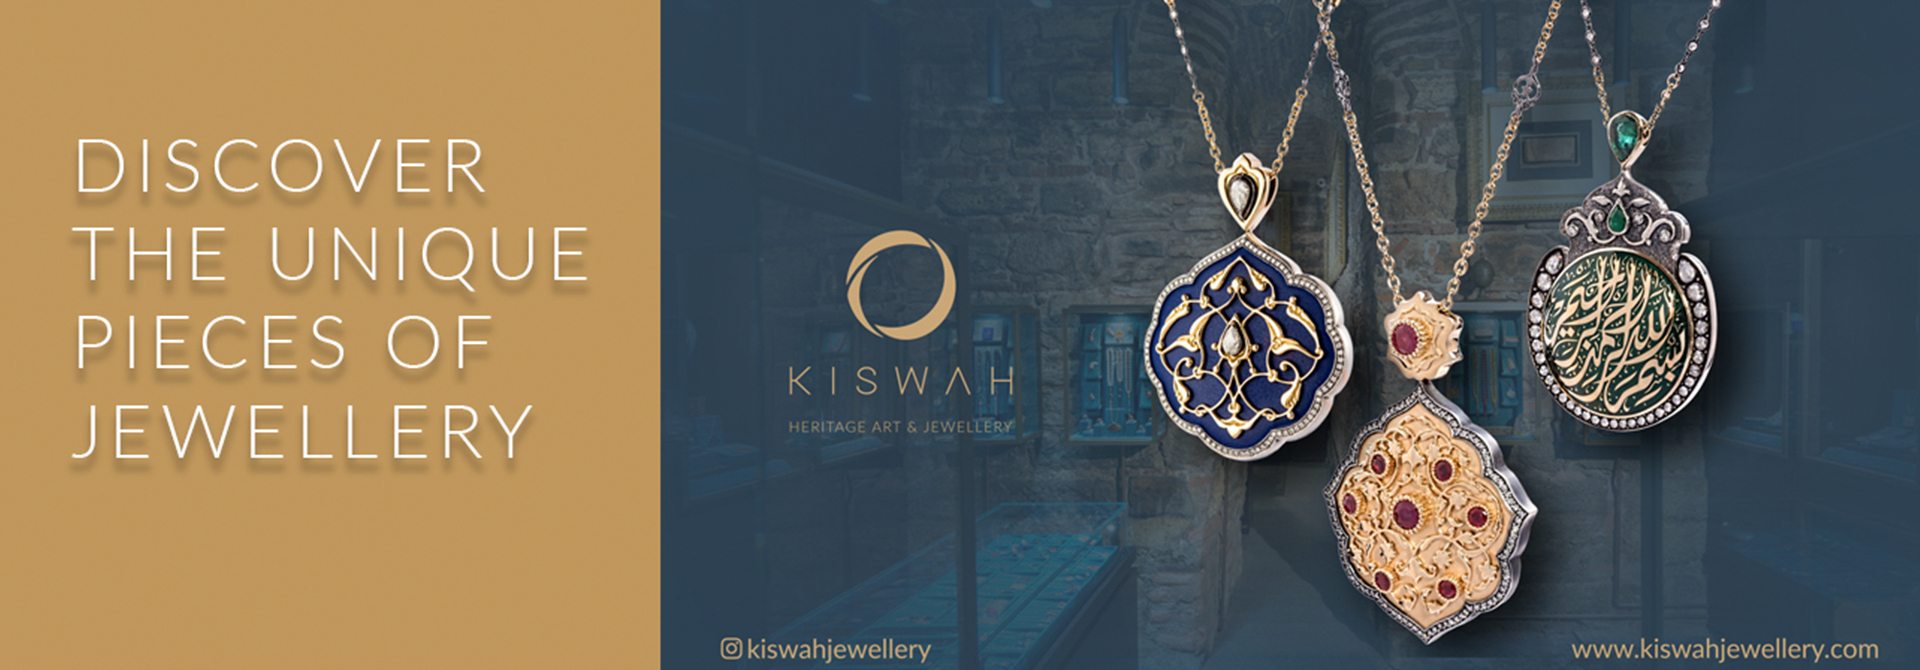 Kiswah Jewelry